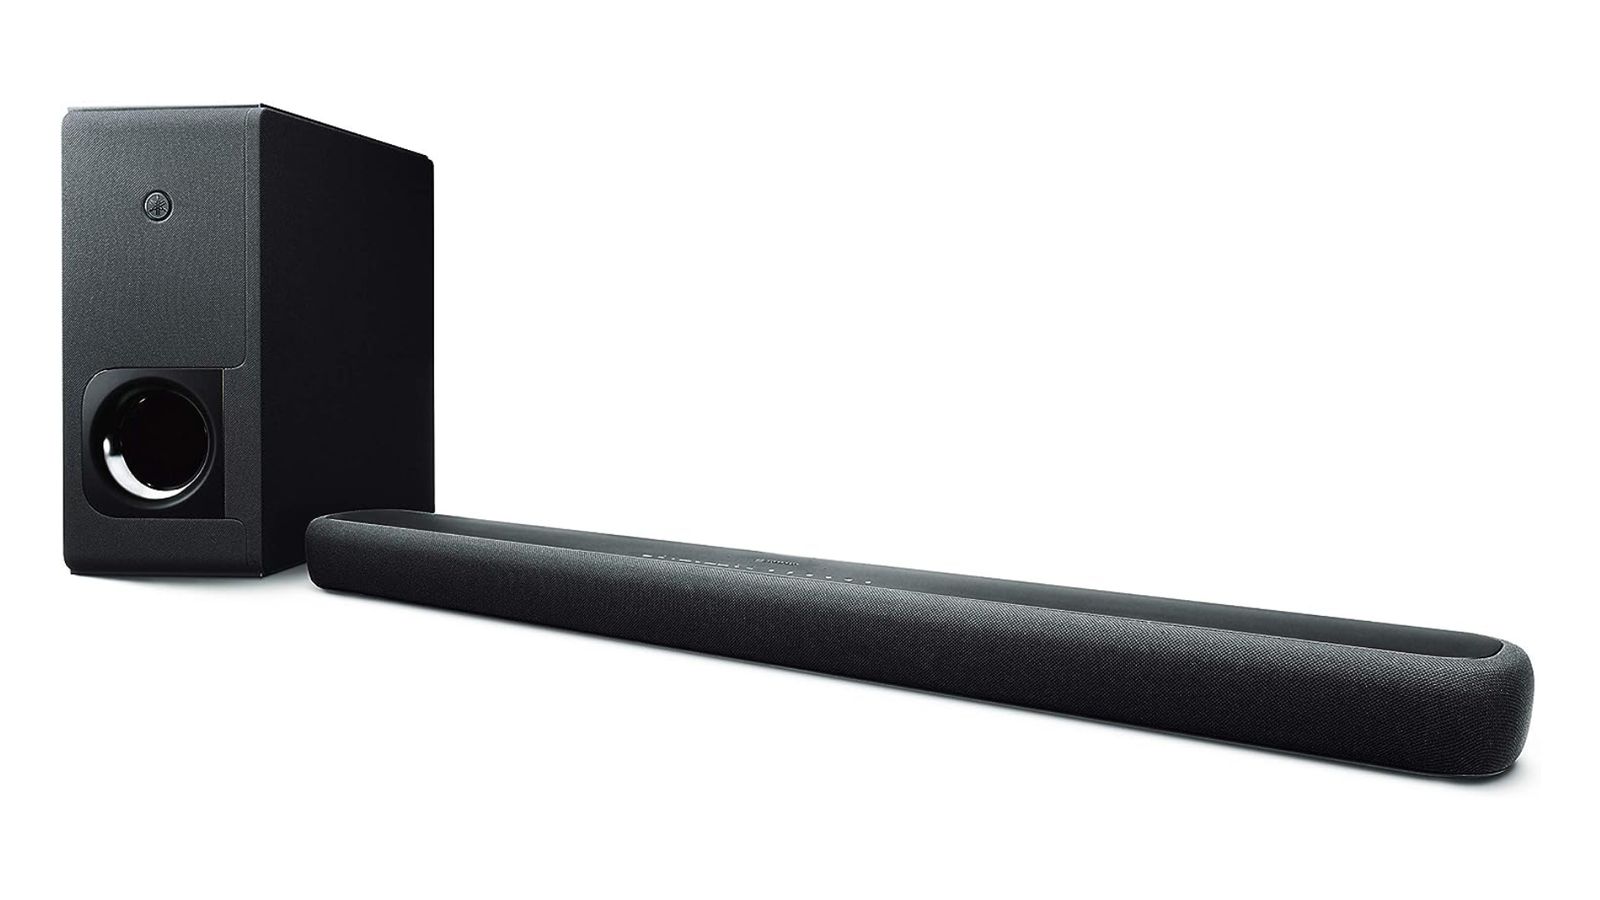 Yamaha Audio YAS-209BL product image of a long black soundbar next to a black speaker.